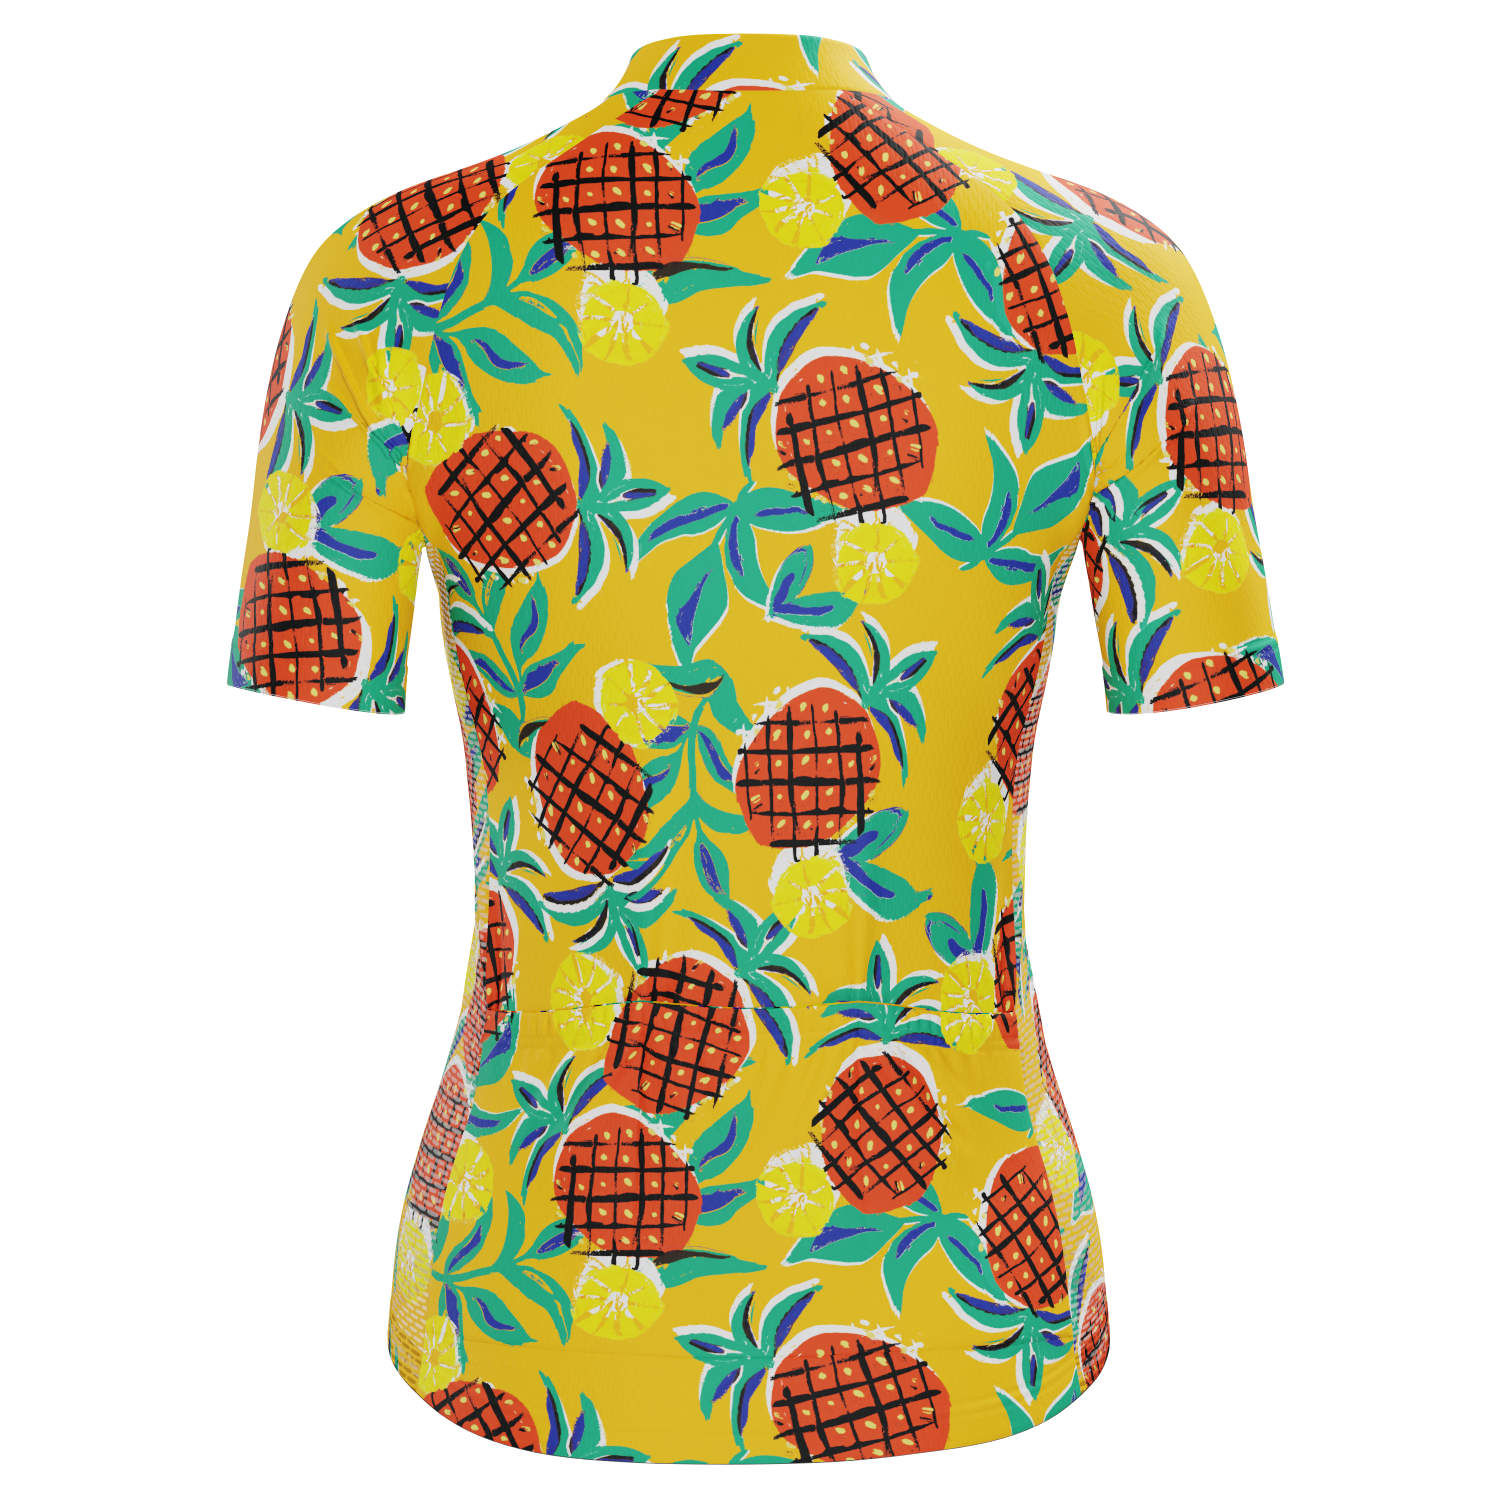 Women's Pineapple Fun Short Sleeve Cycling Jersey